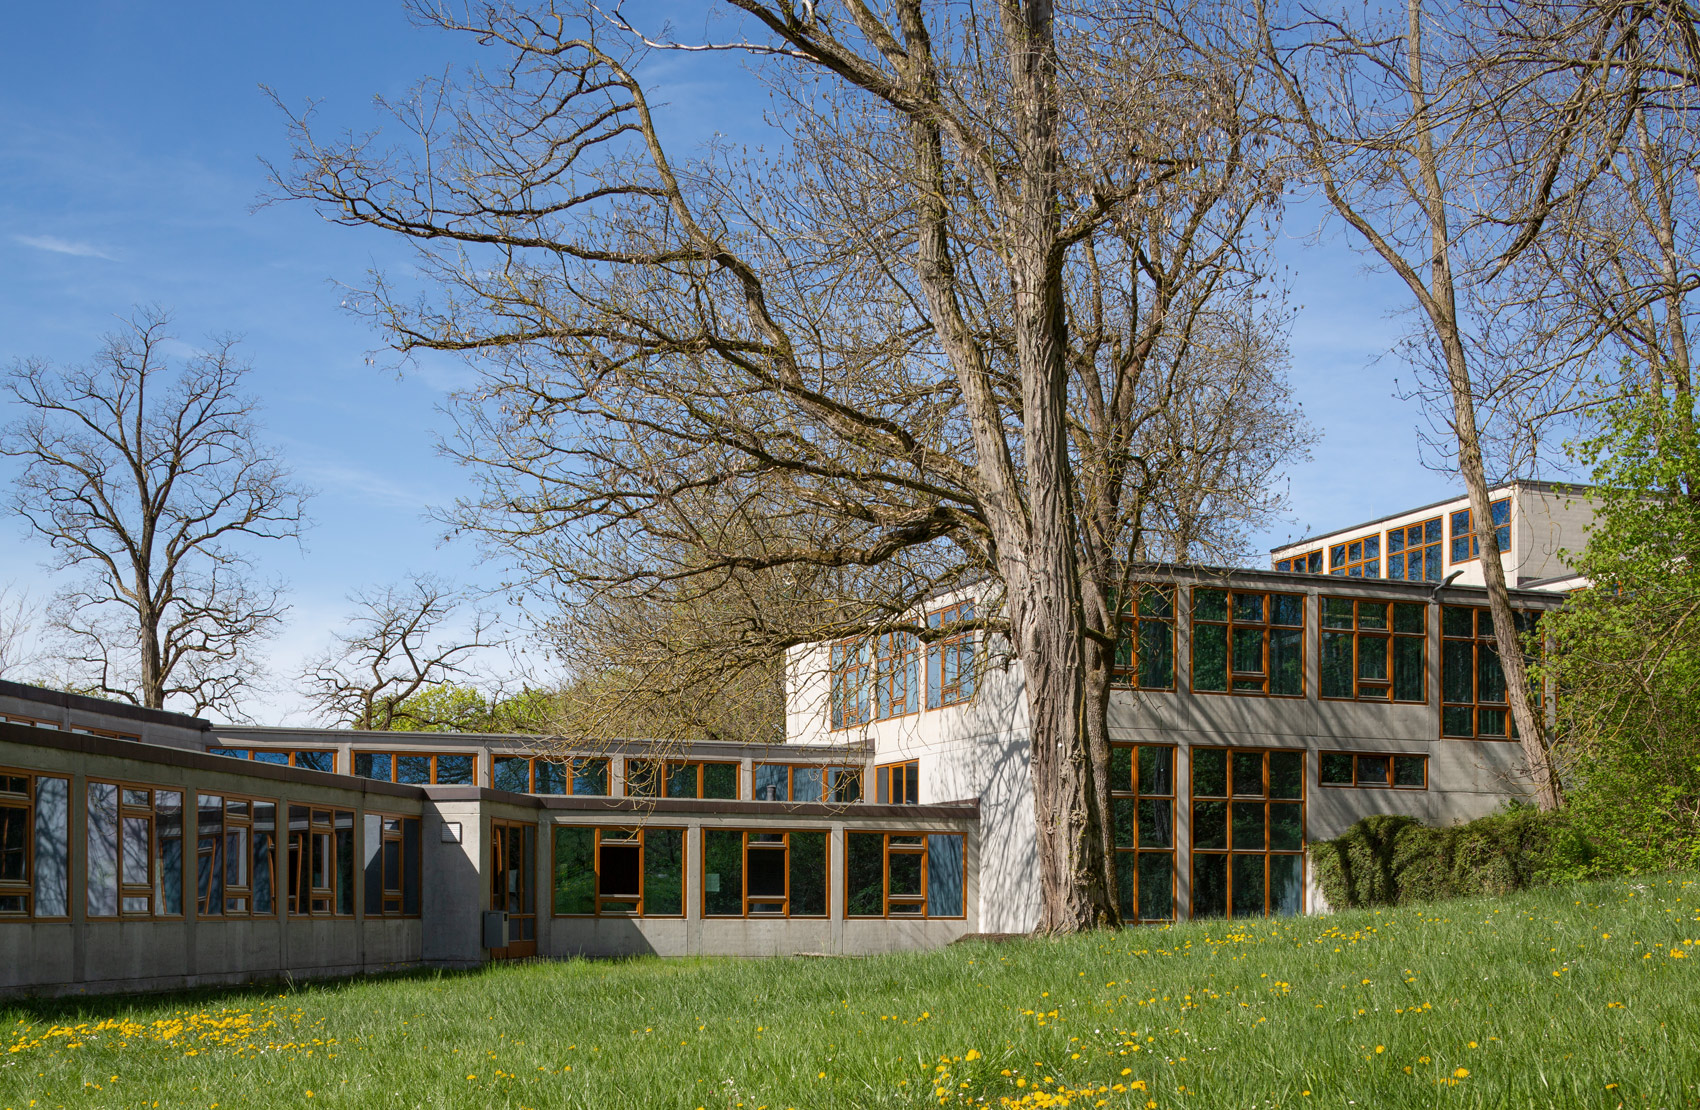 Foundation of the Ulm School of Design